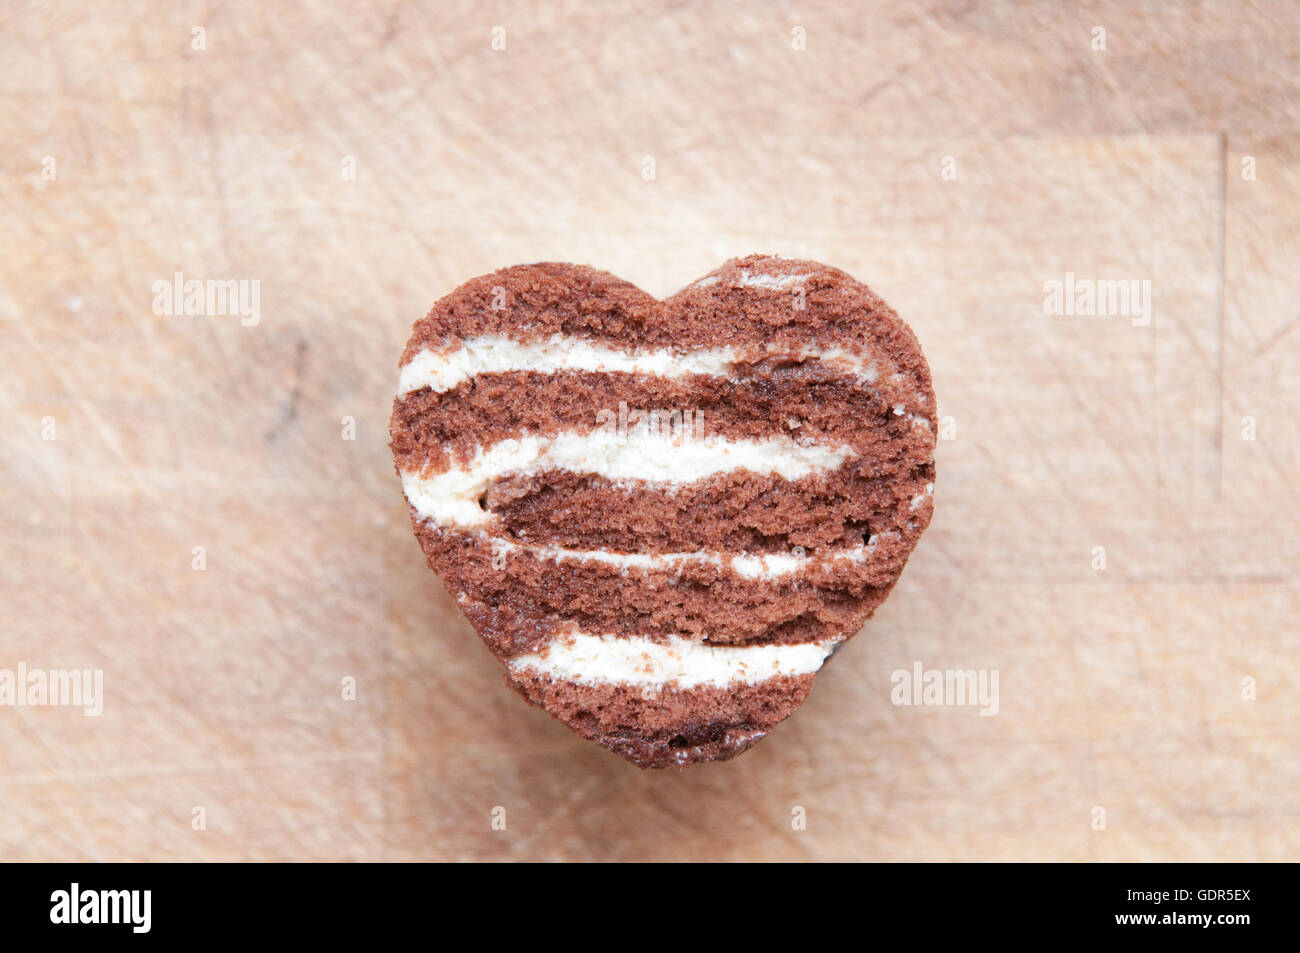 Love heart shape food made from chocolate cake Stock Photo